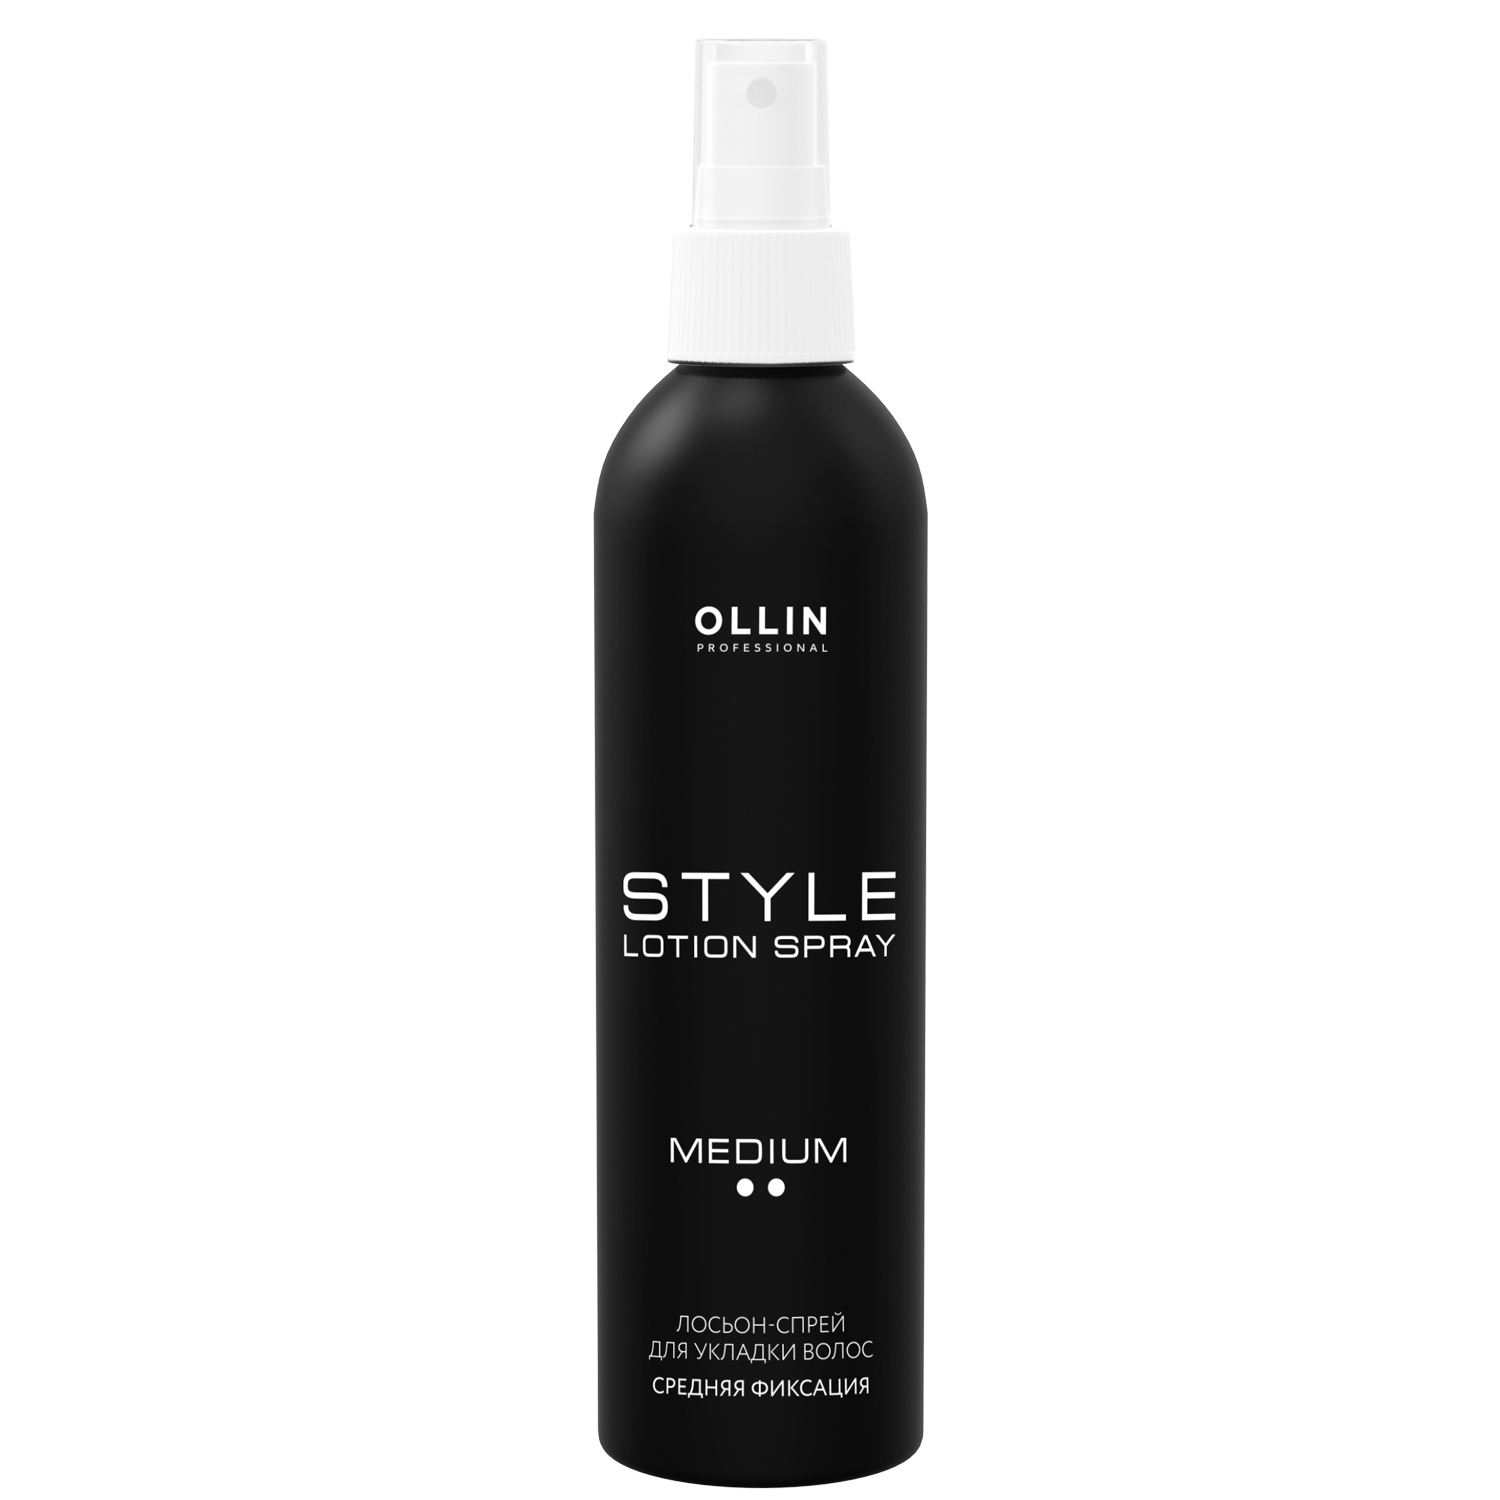 Ollin Professional Лосьон-спрей для укладки волос средней фиксации, 250 мл (Ollin Professional, Style) ollin professional лосьон спрей для укладки волос style средней фиксации 250 мл